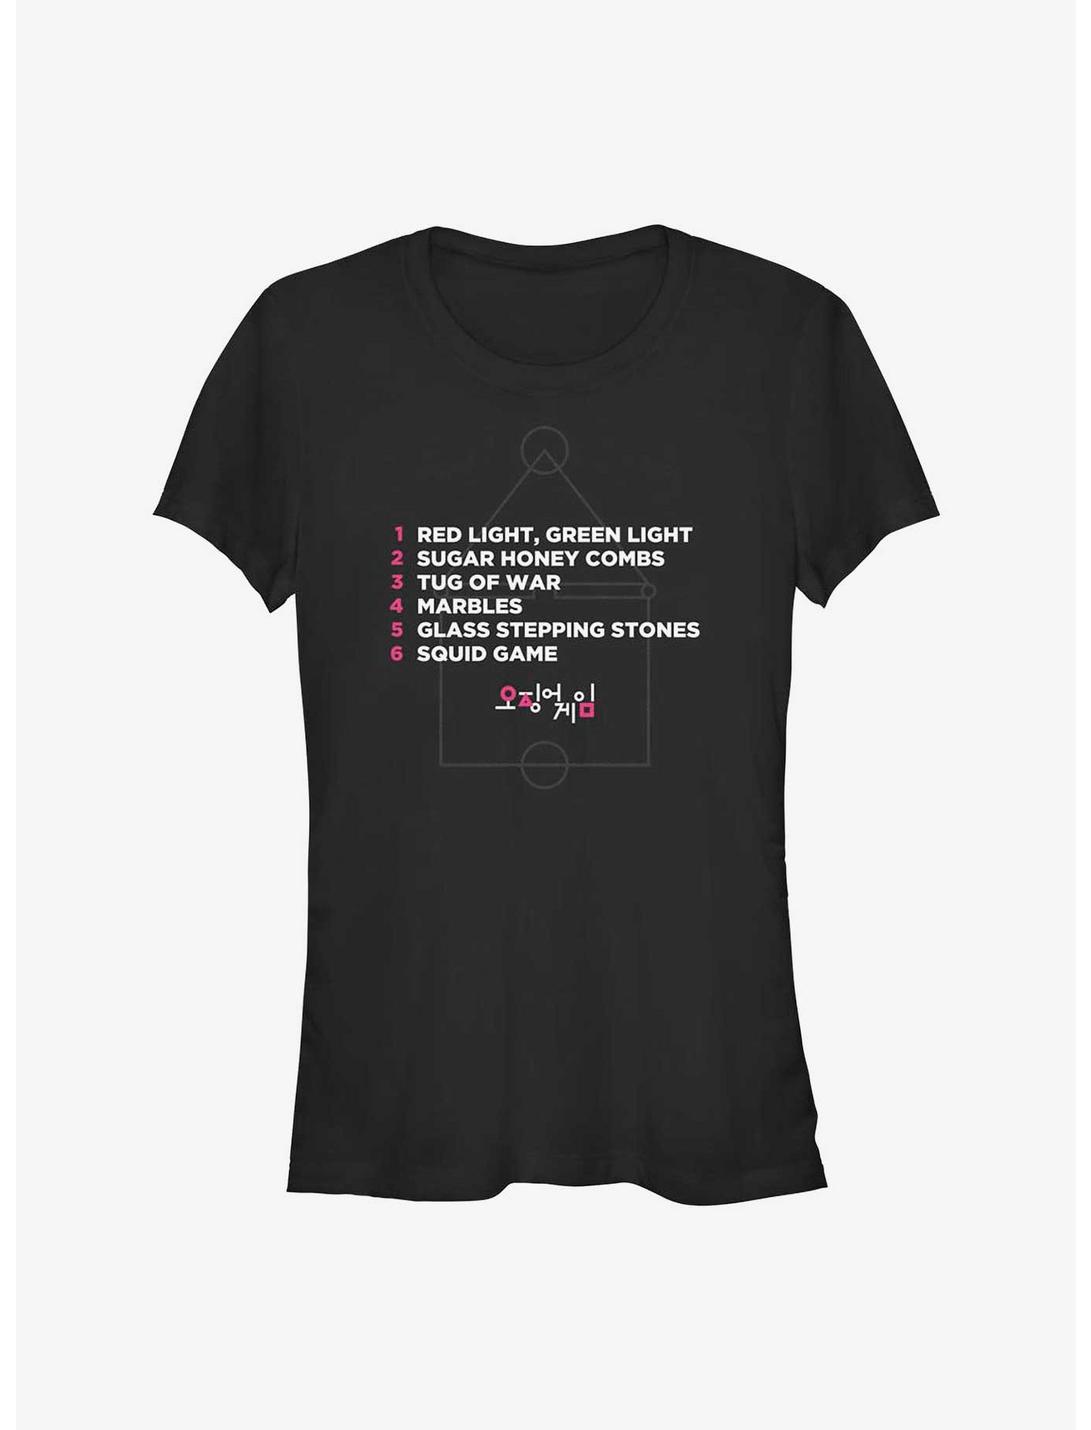 Squid Game Games List Girls T-Shirt, BLACK, hi-res